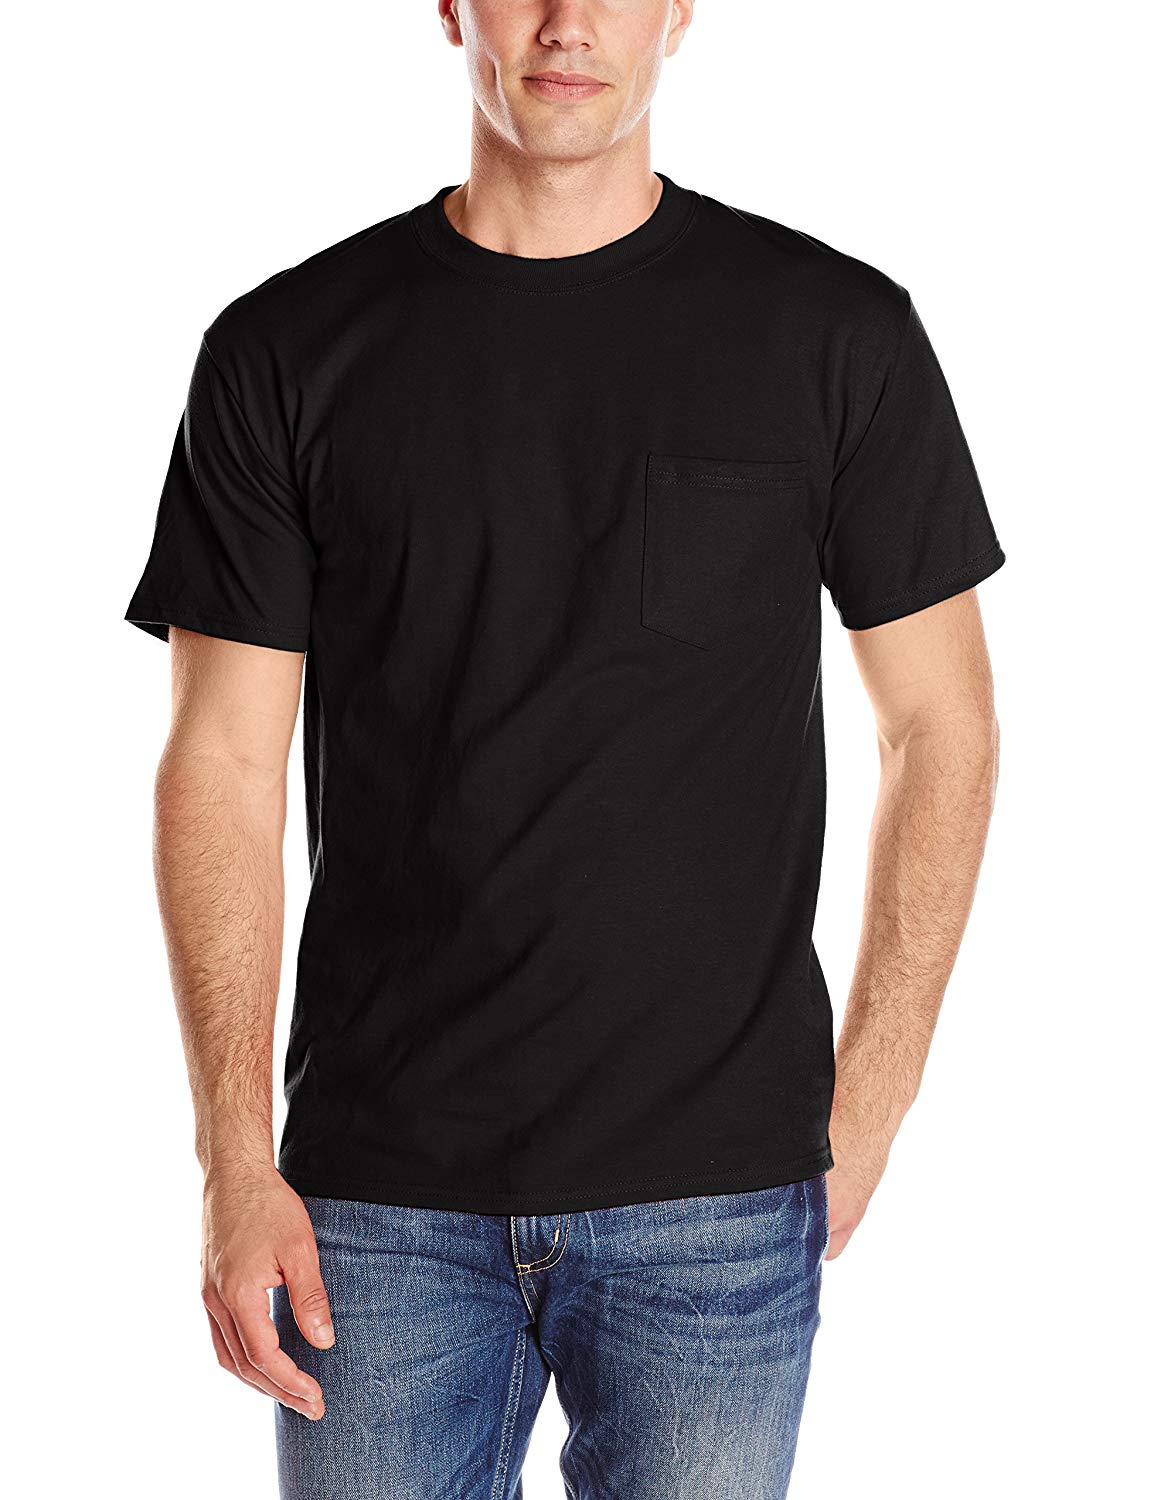 4 Tagless Men’s T-shirts XL 46-48” Short Sleeve  Cotton